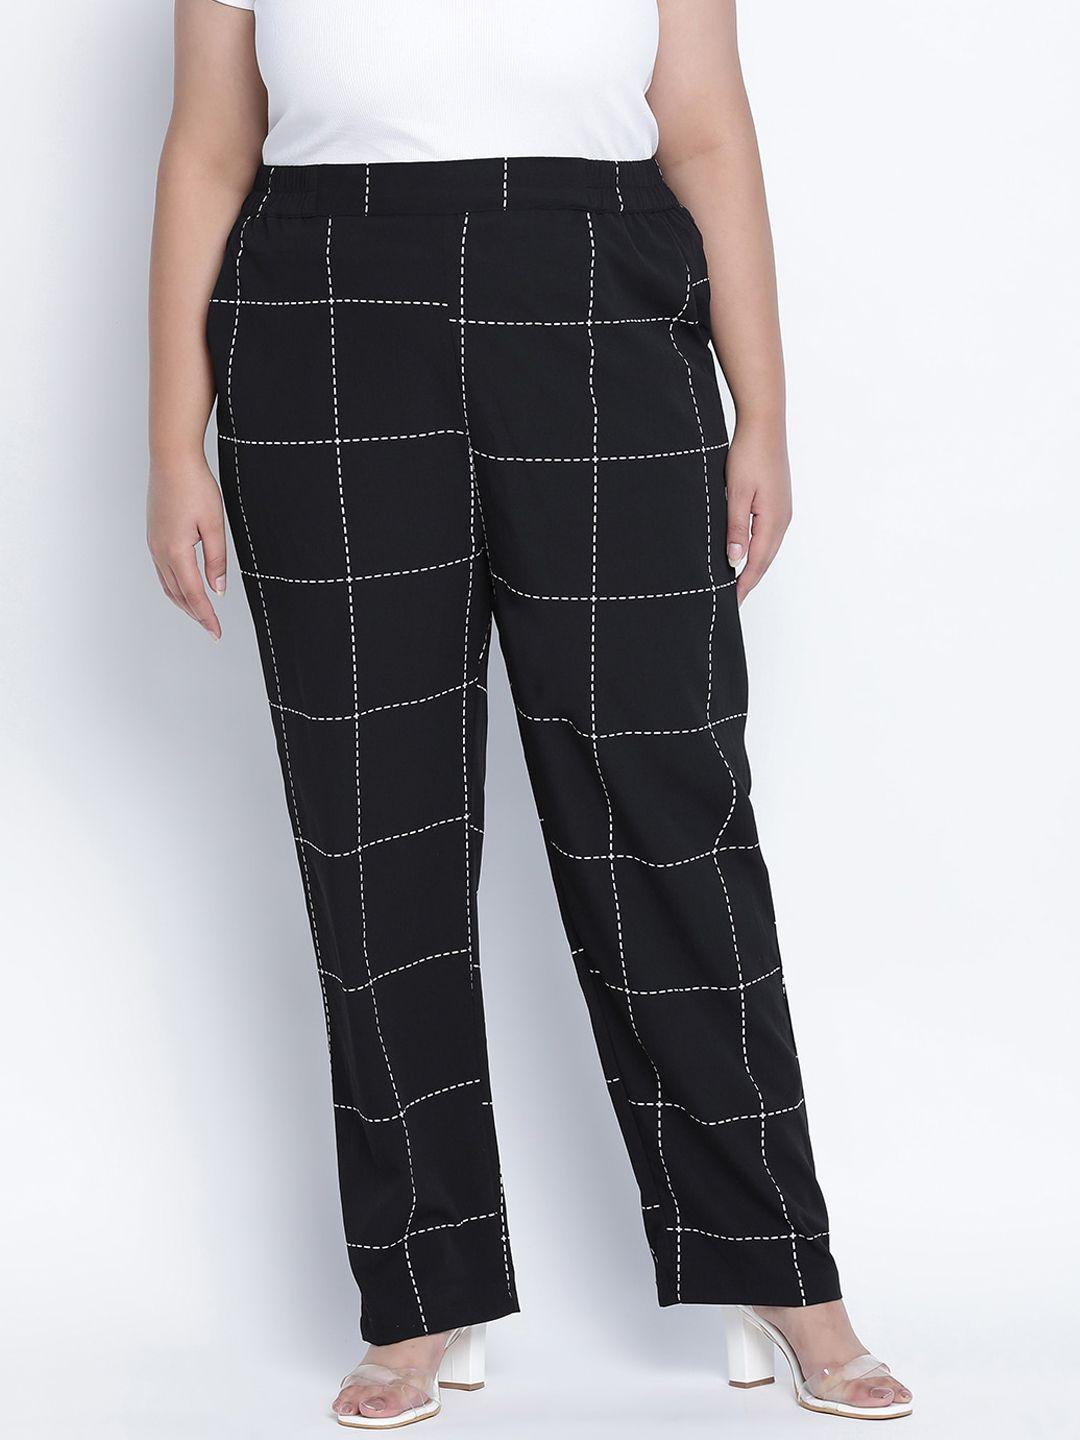 oxolloxo-plus-size-women-black-checked-trousers